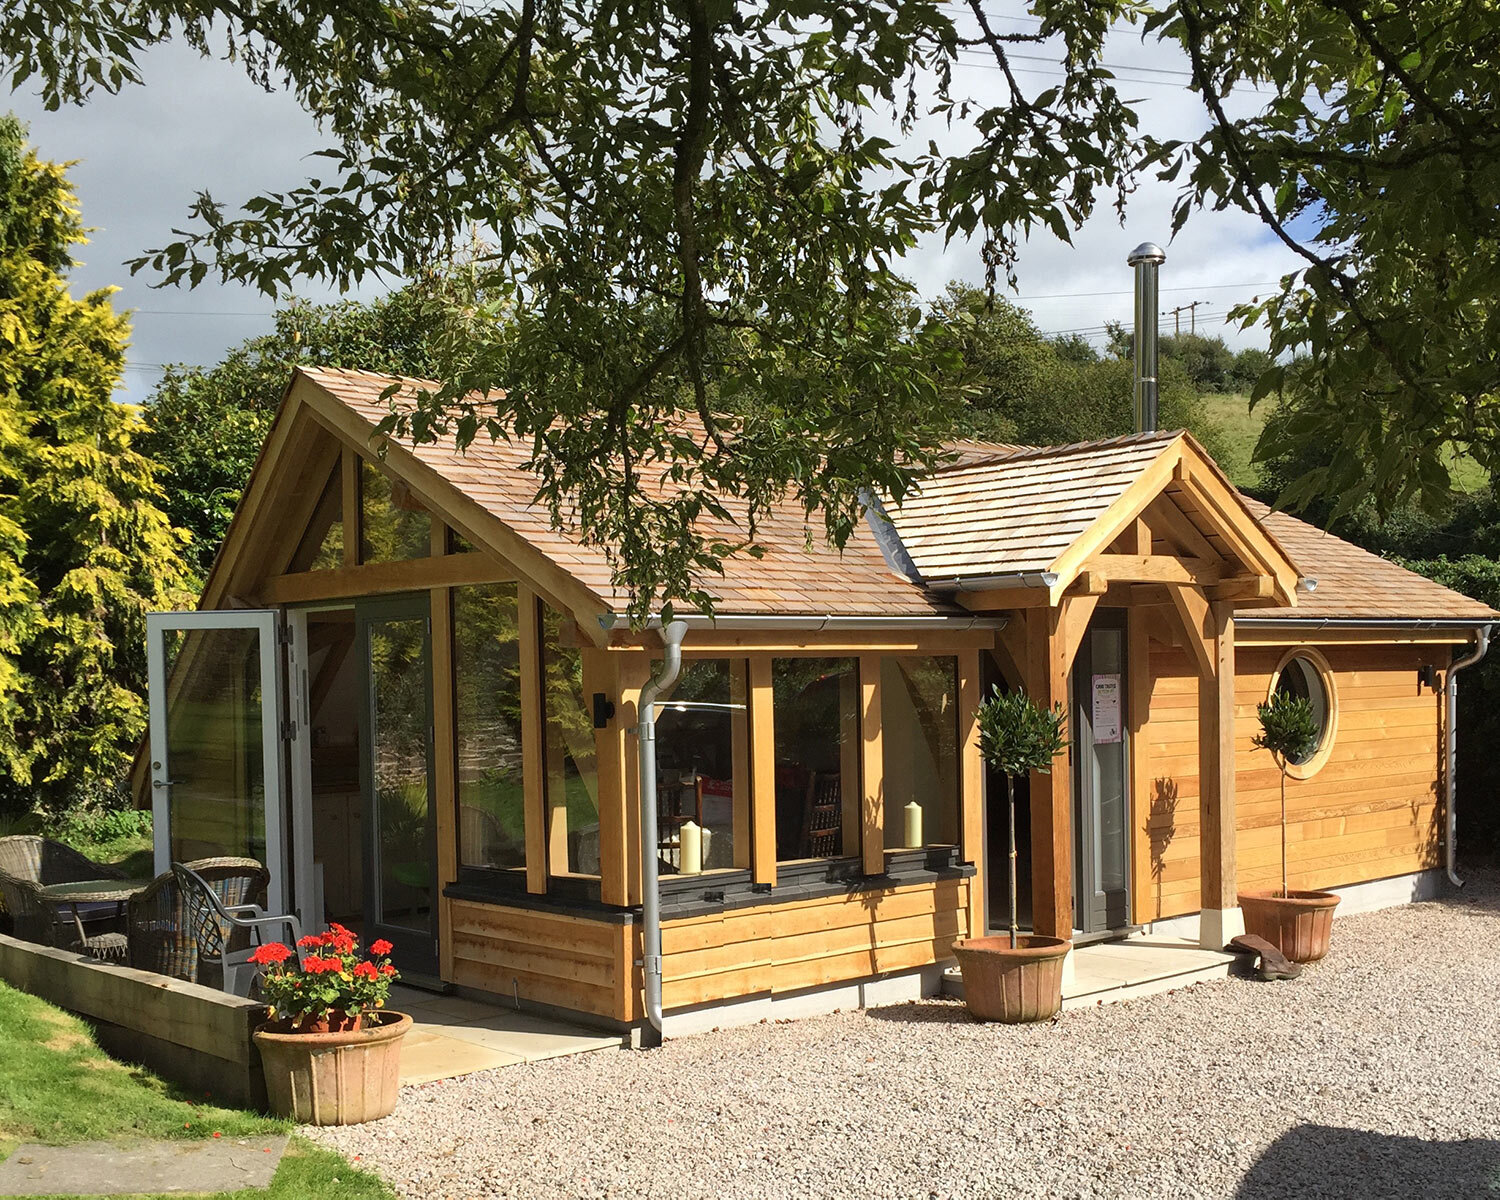 Oak-framed-lodge-cabin-with-porch-cedar-shingle-roof-providing-accommodation